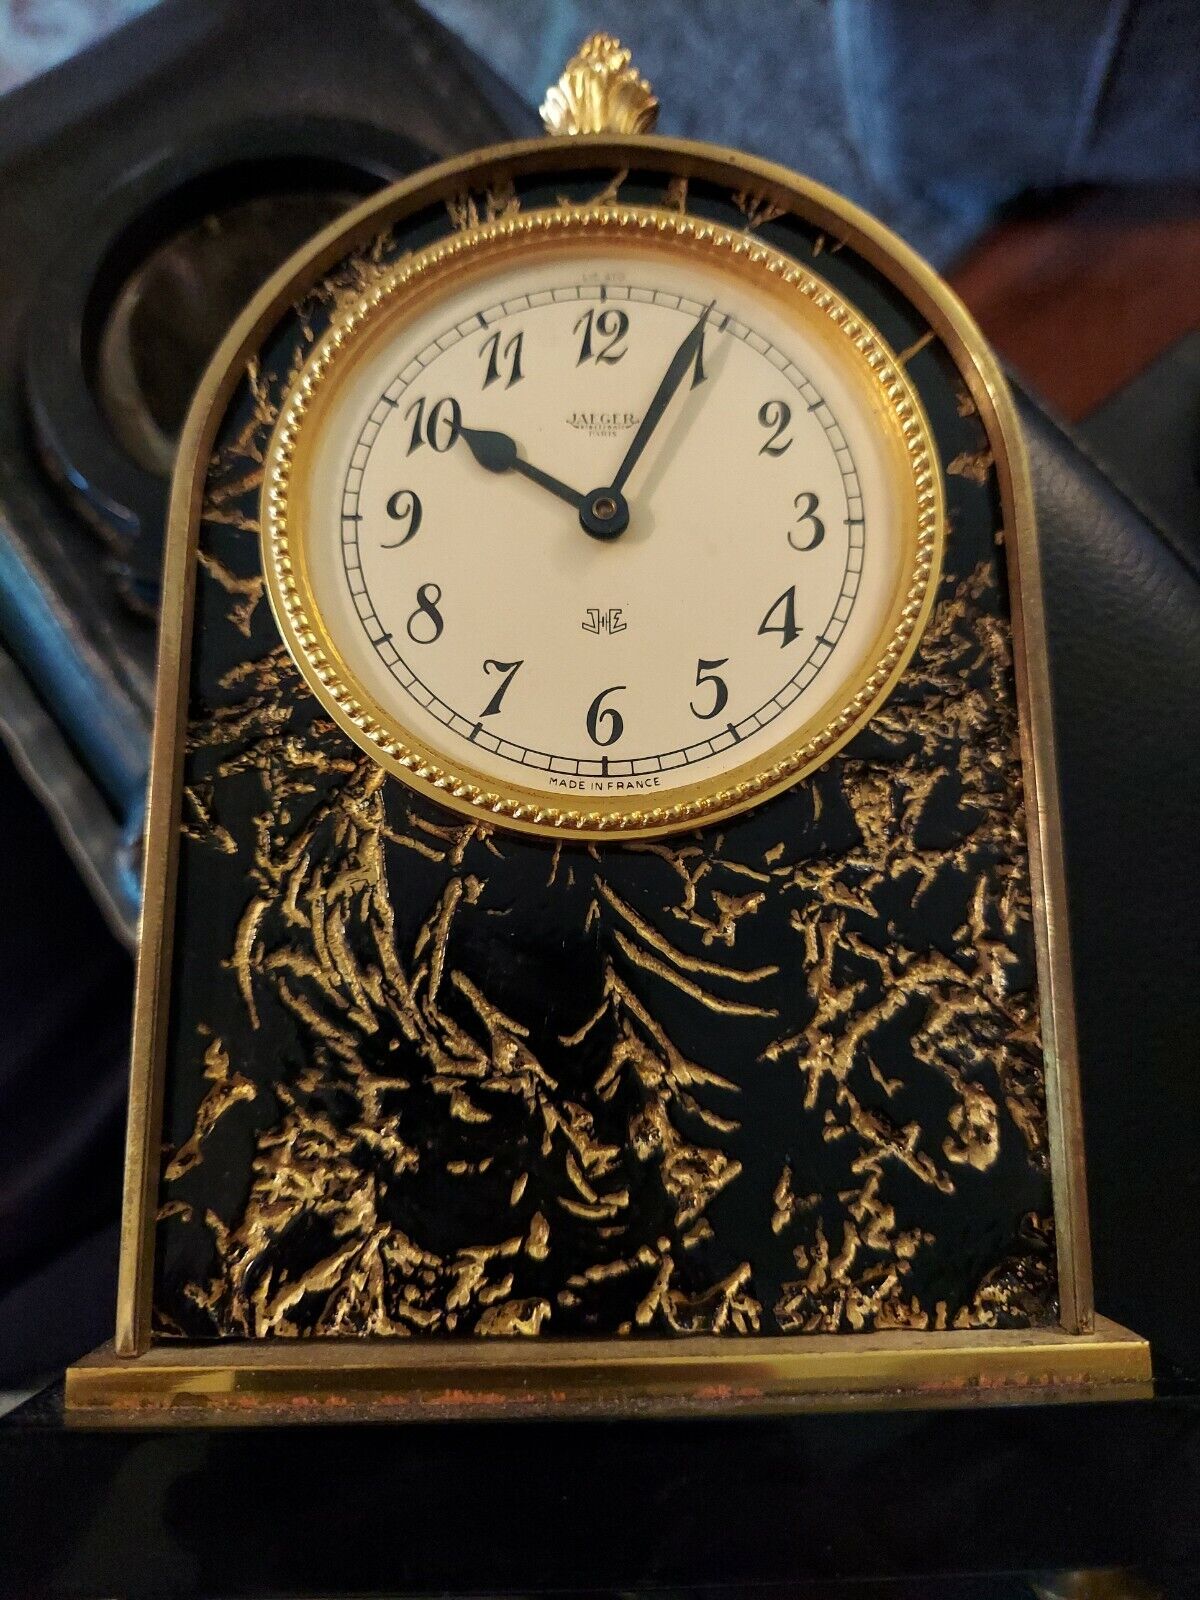  Jaeger lecoultre clock